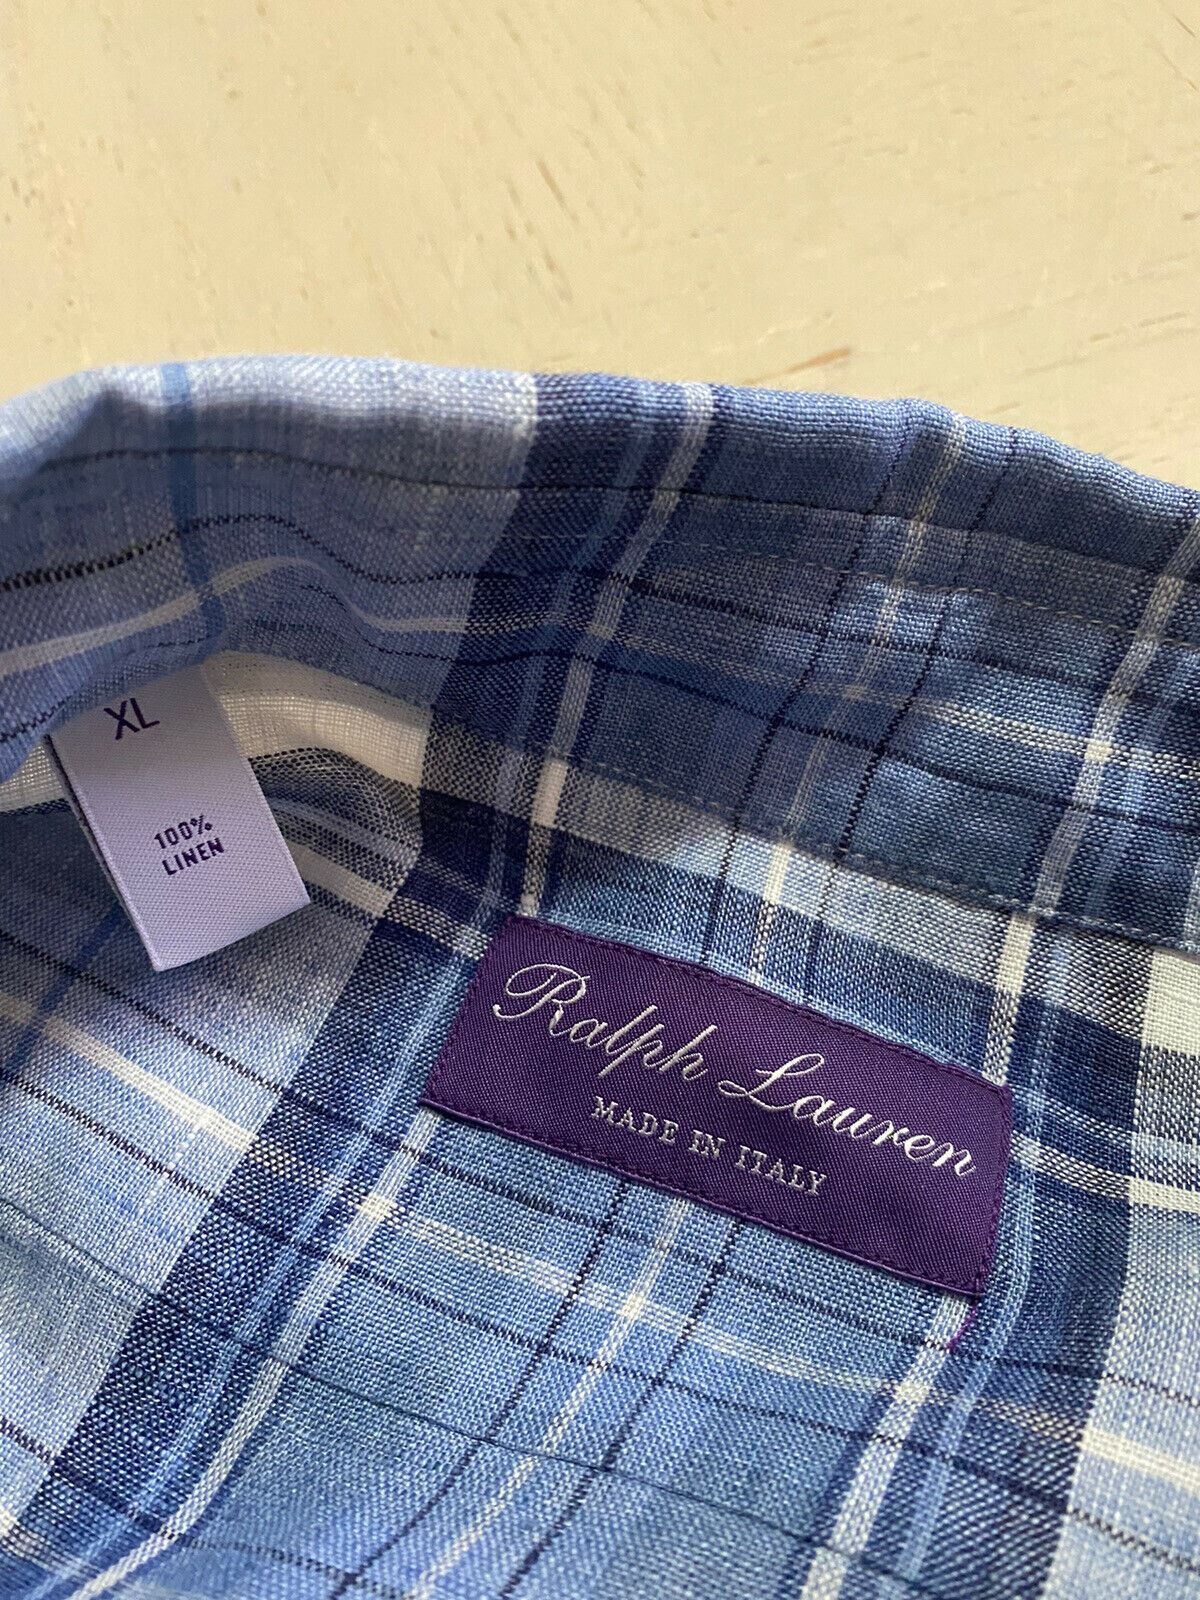 NWT $495 Ralph Lauren Purple Label Мужская льняная рубашка синяя XL Италия